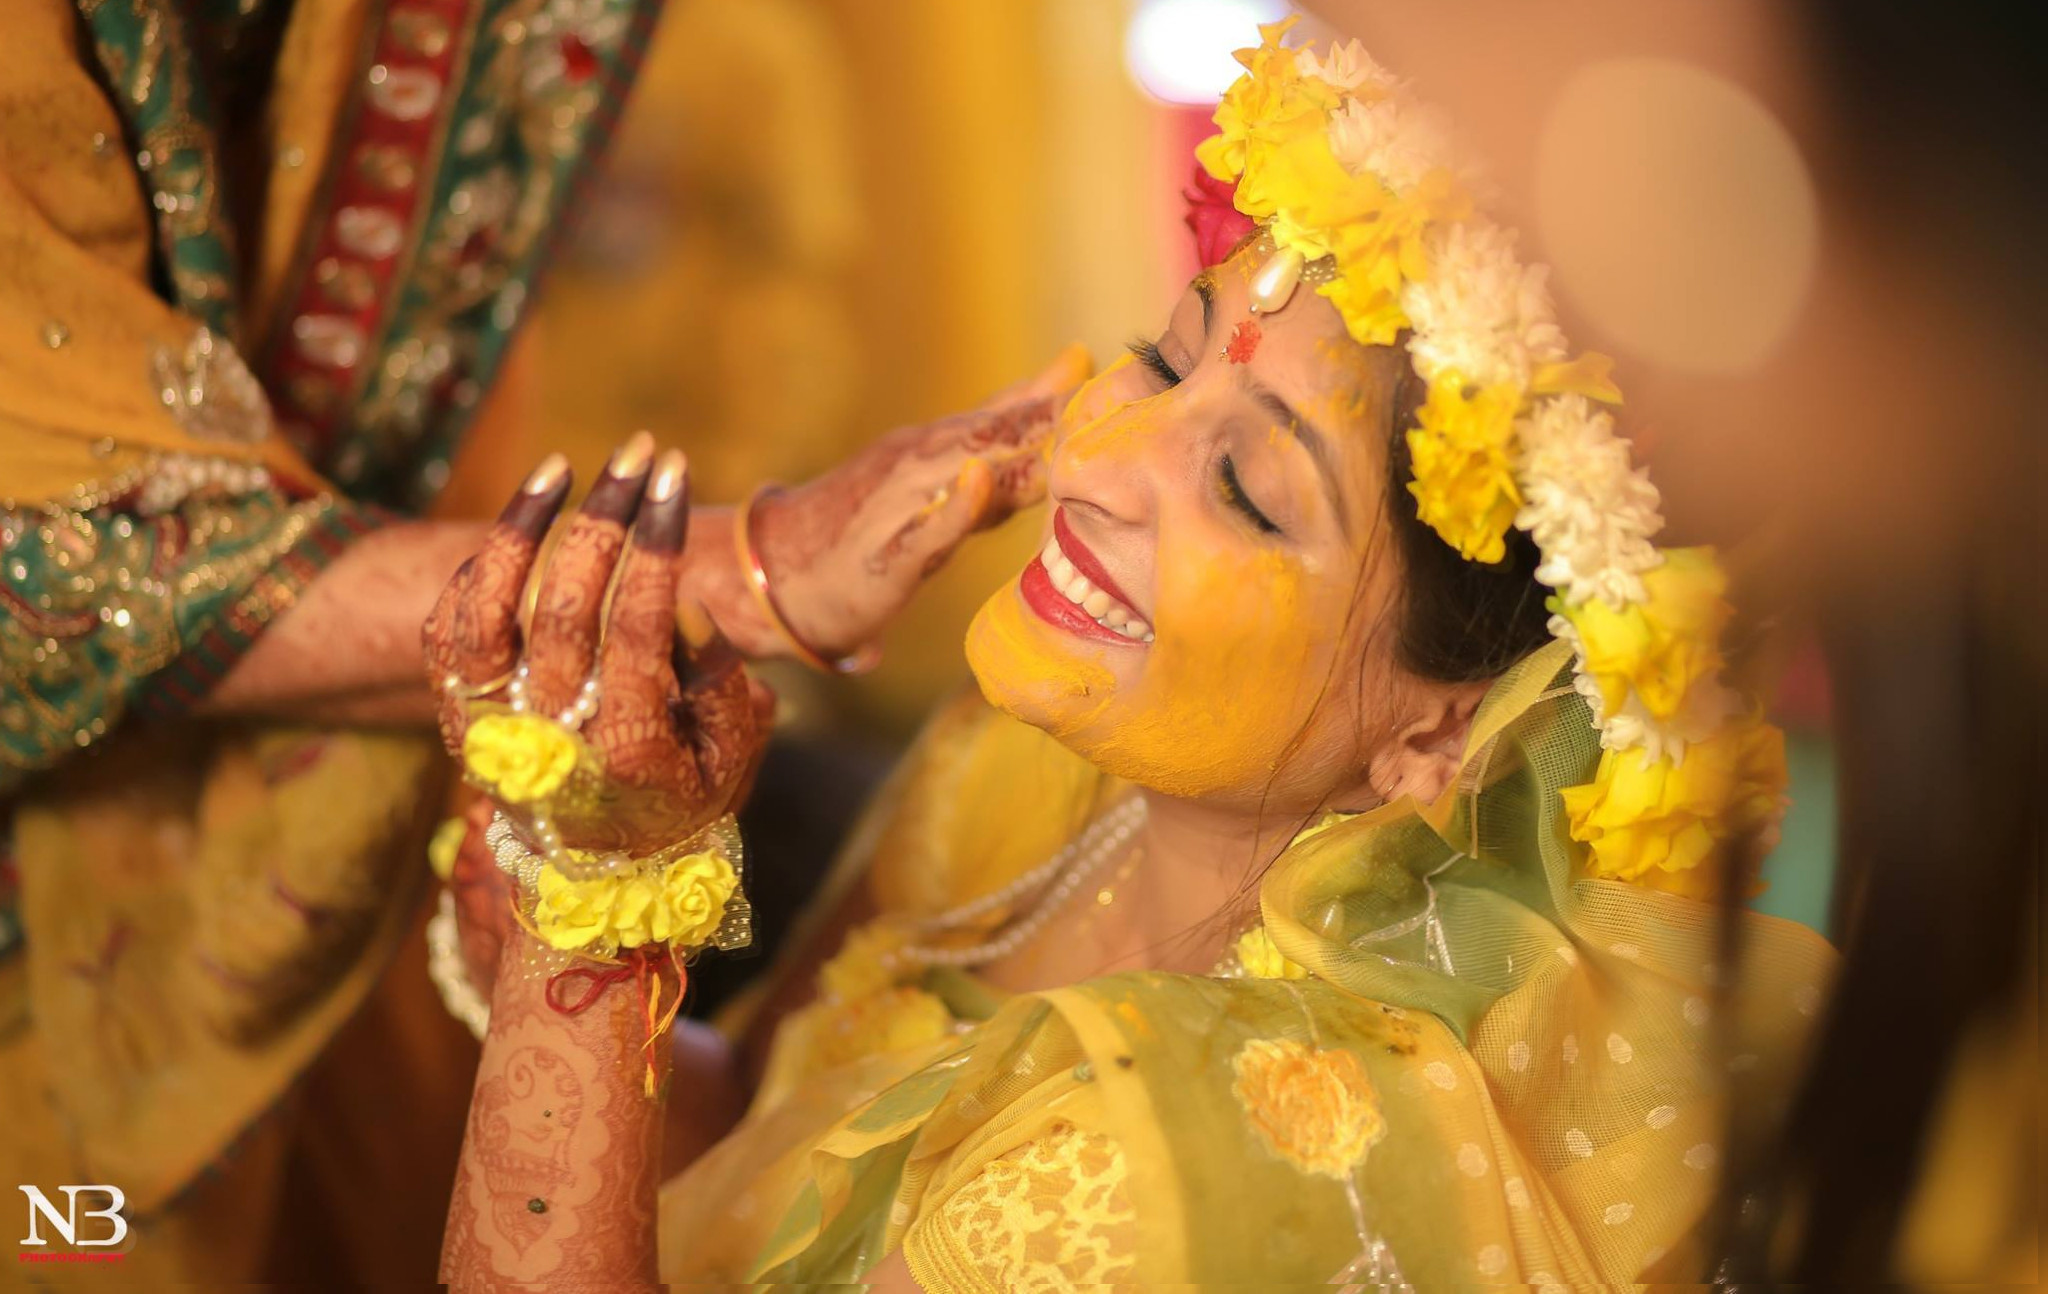 Ranjan Bhattacharya  Wedding Photographer, Kolkata